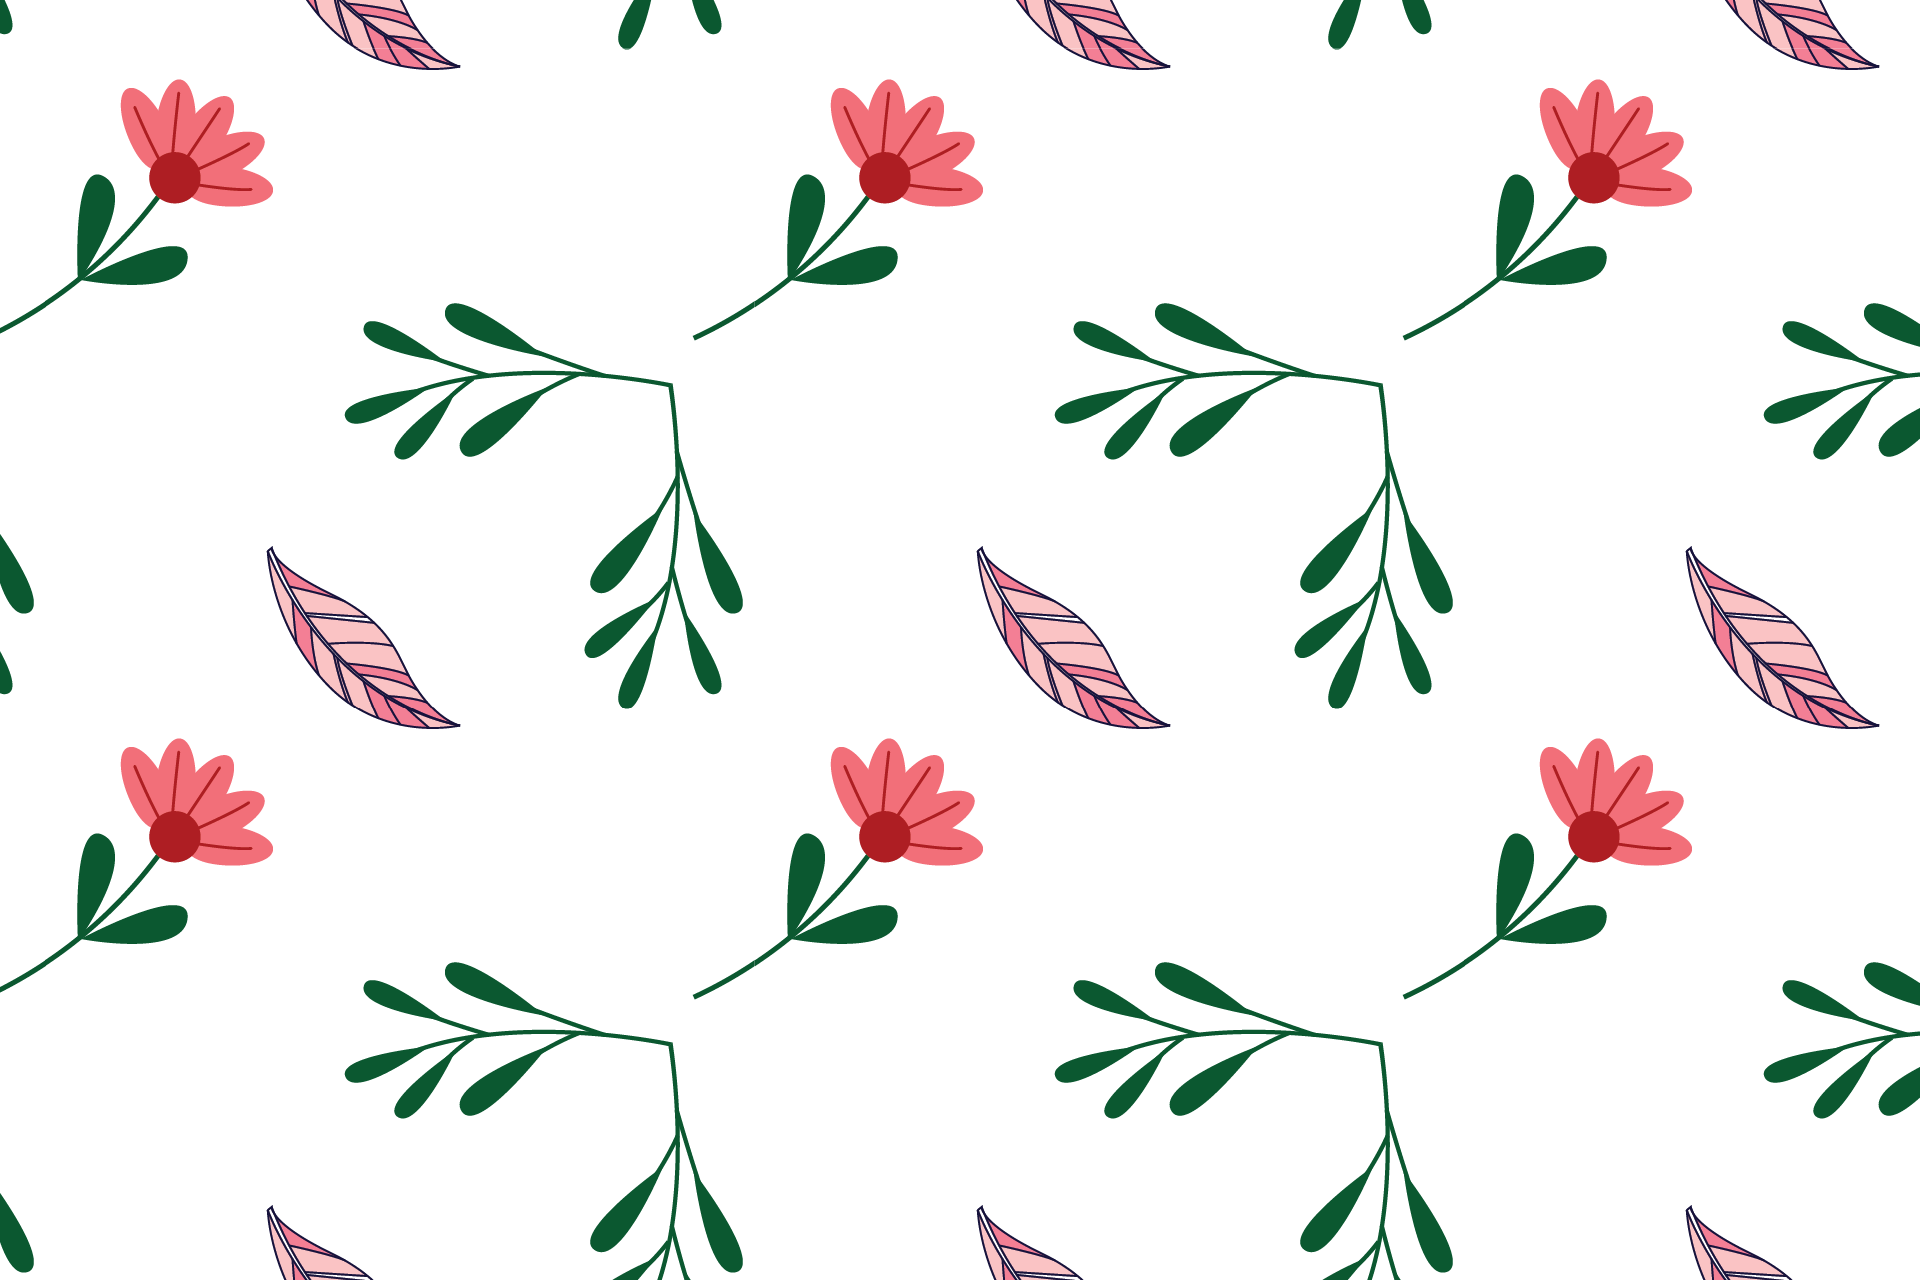 Girly Flower Backgrounds